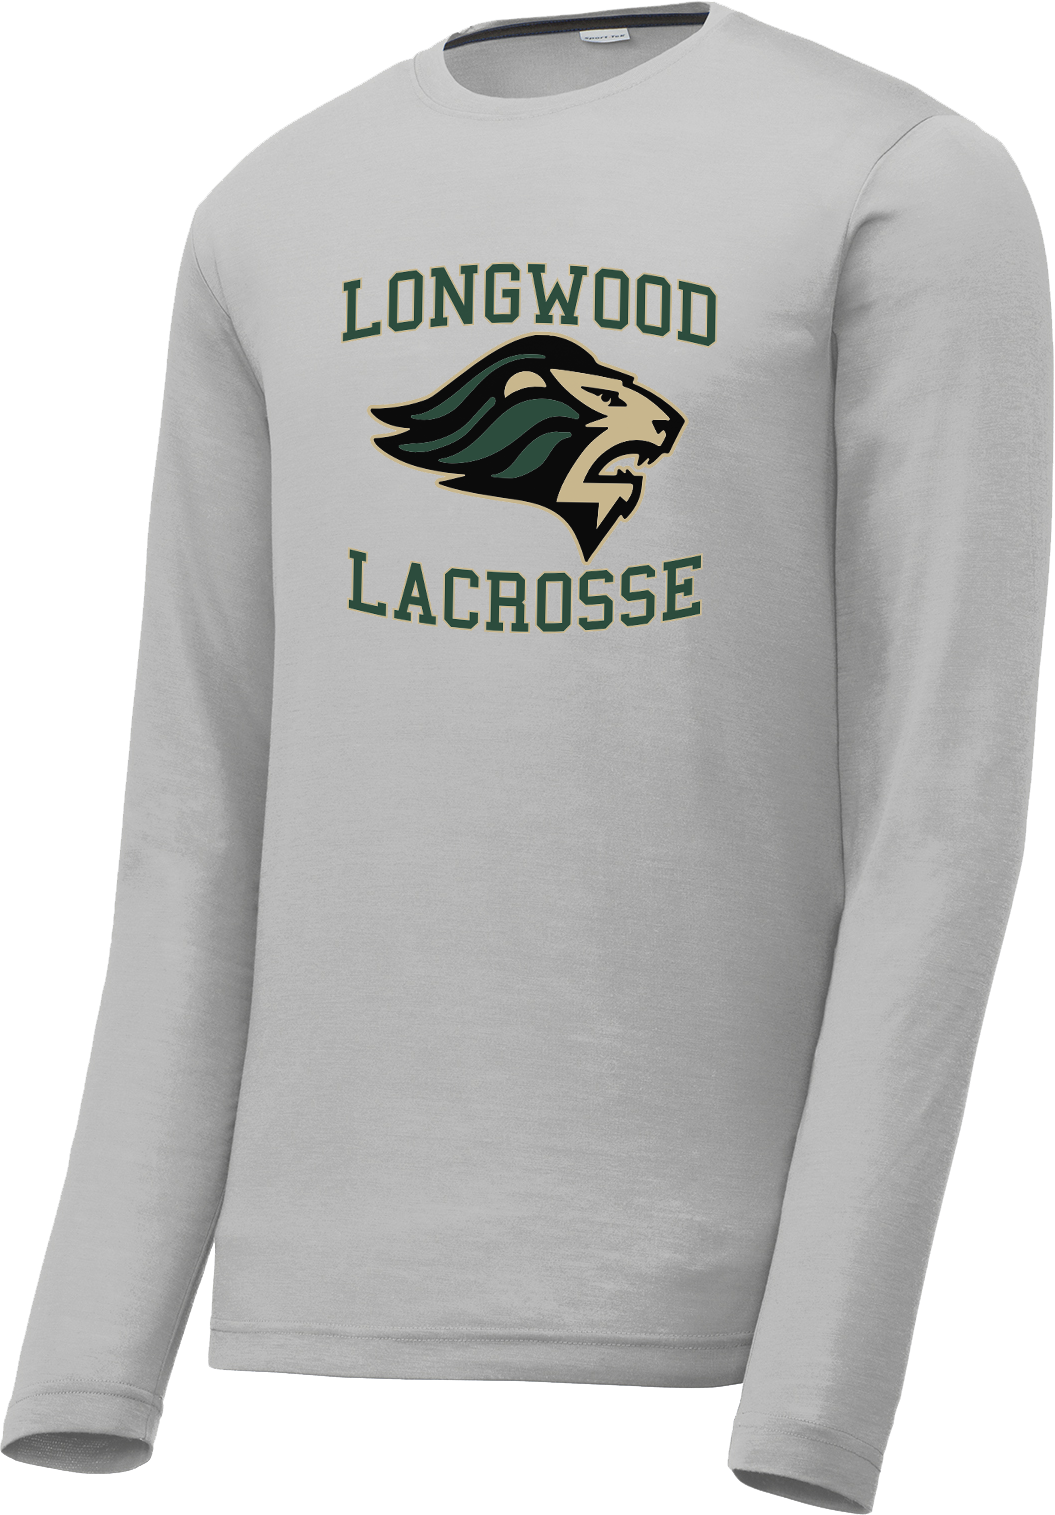 Longwood Lacrosse Grey Long Sleeve CottonTouch Performance Shirt